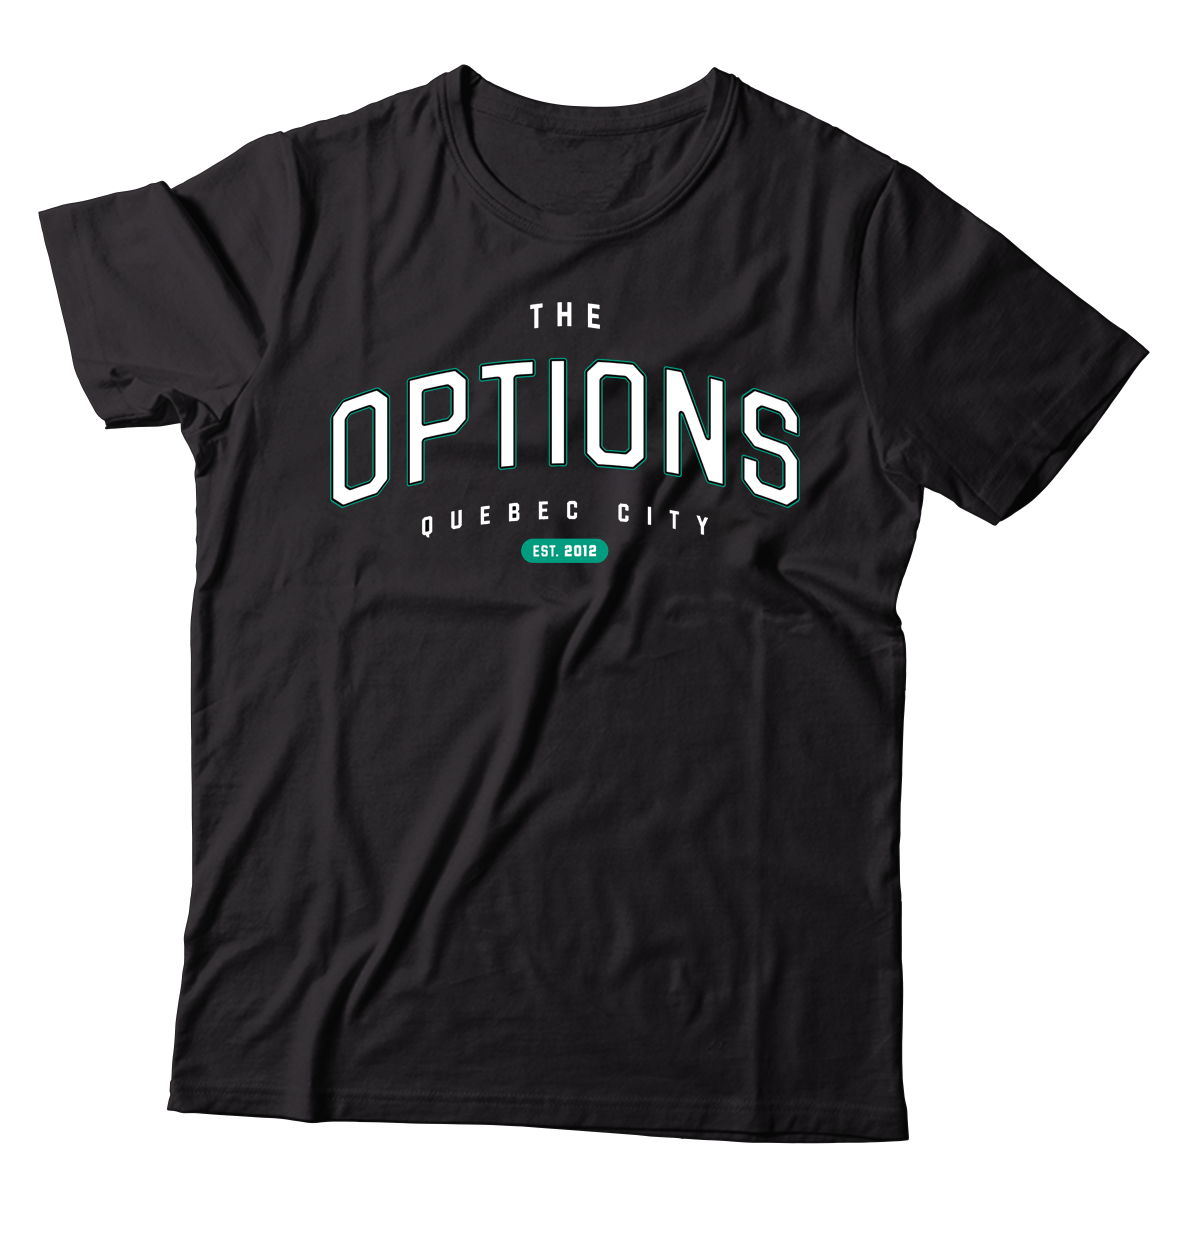 THE OPTIONS - "Quebec City" (Black) (T-Shirt)